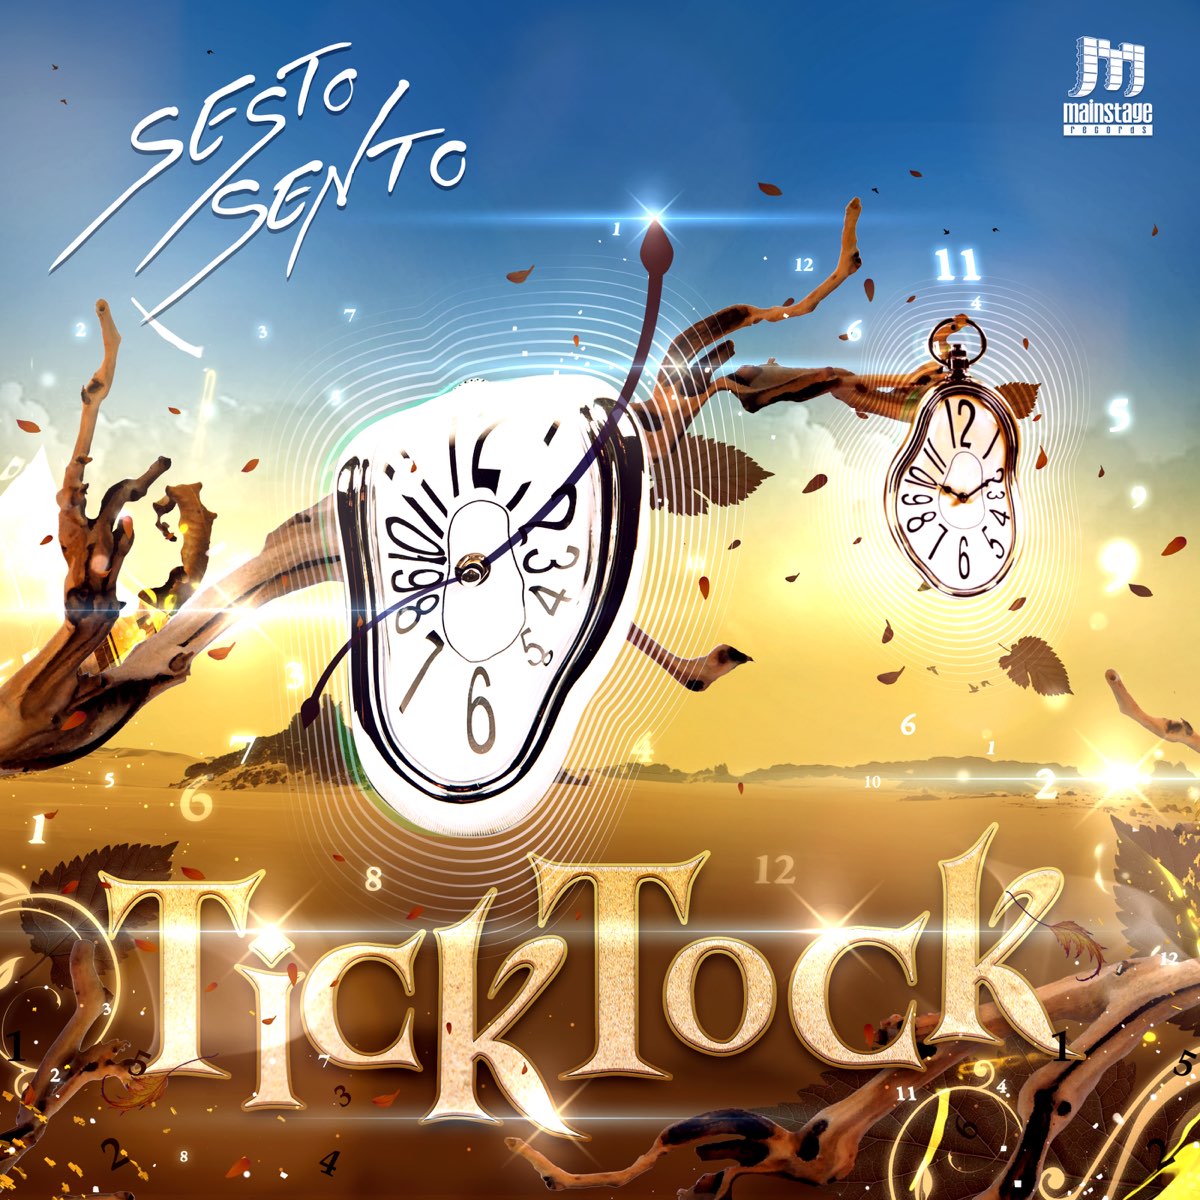 Песня tick tock. Tick-Tock Tick-Tock. Sesto Sento Википедия. Puma Tick Tock. Pusha Tick Tock album.